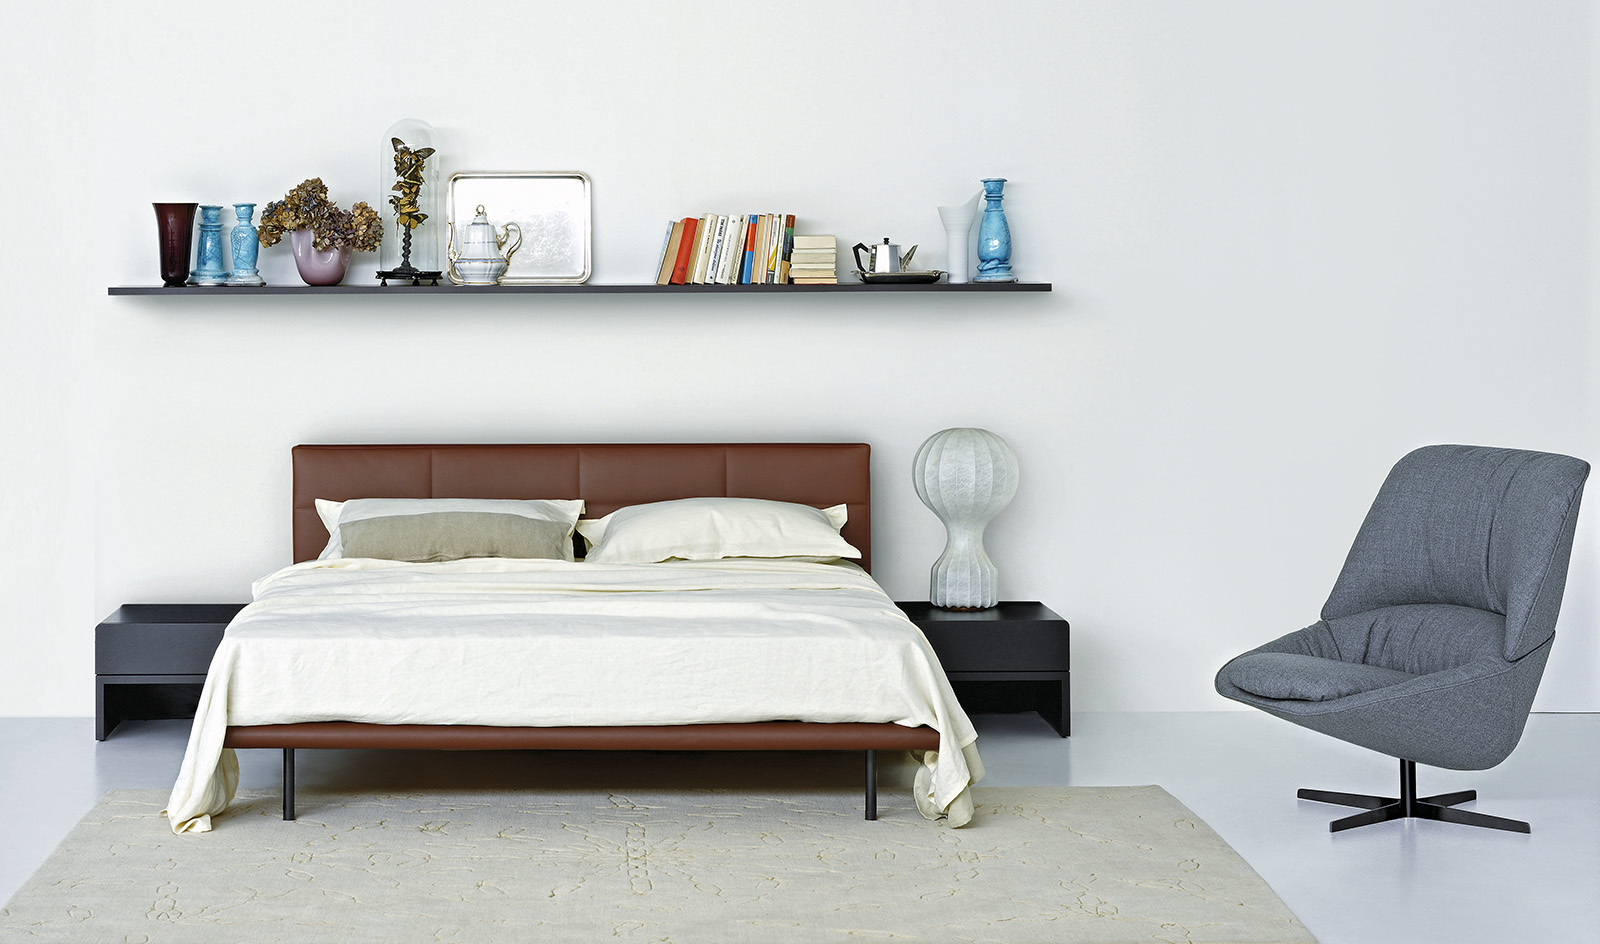 arflex- Ledletto– cama–cabezal – almohadillado - diseño – Cini –Boeri desenfundable- individual- matrimonial – dormitorio – hotelería – proyecto – personalizable – lujo - hechoenitalia- moderno- contemporáneo